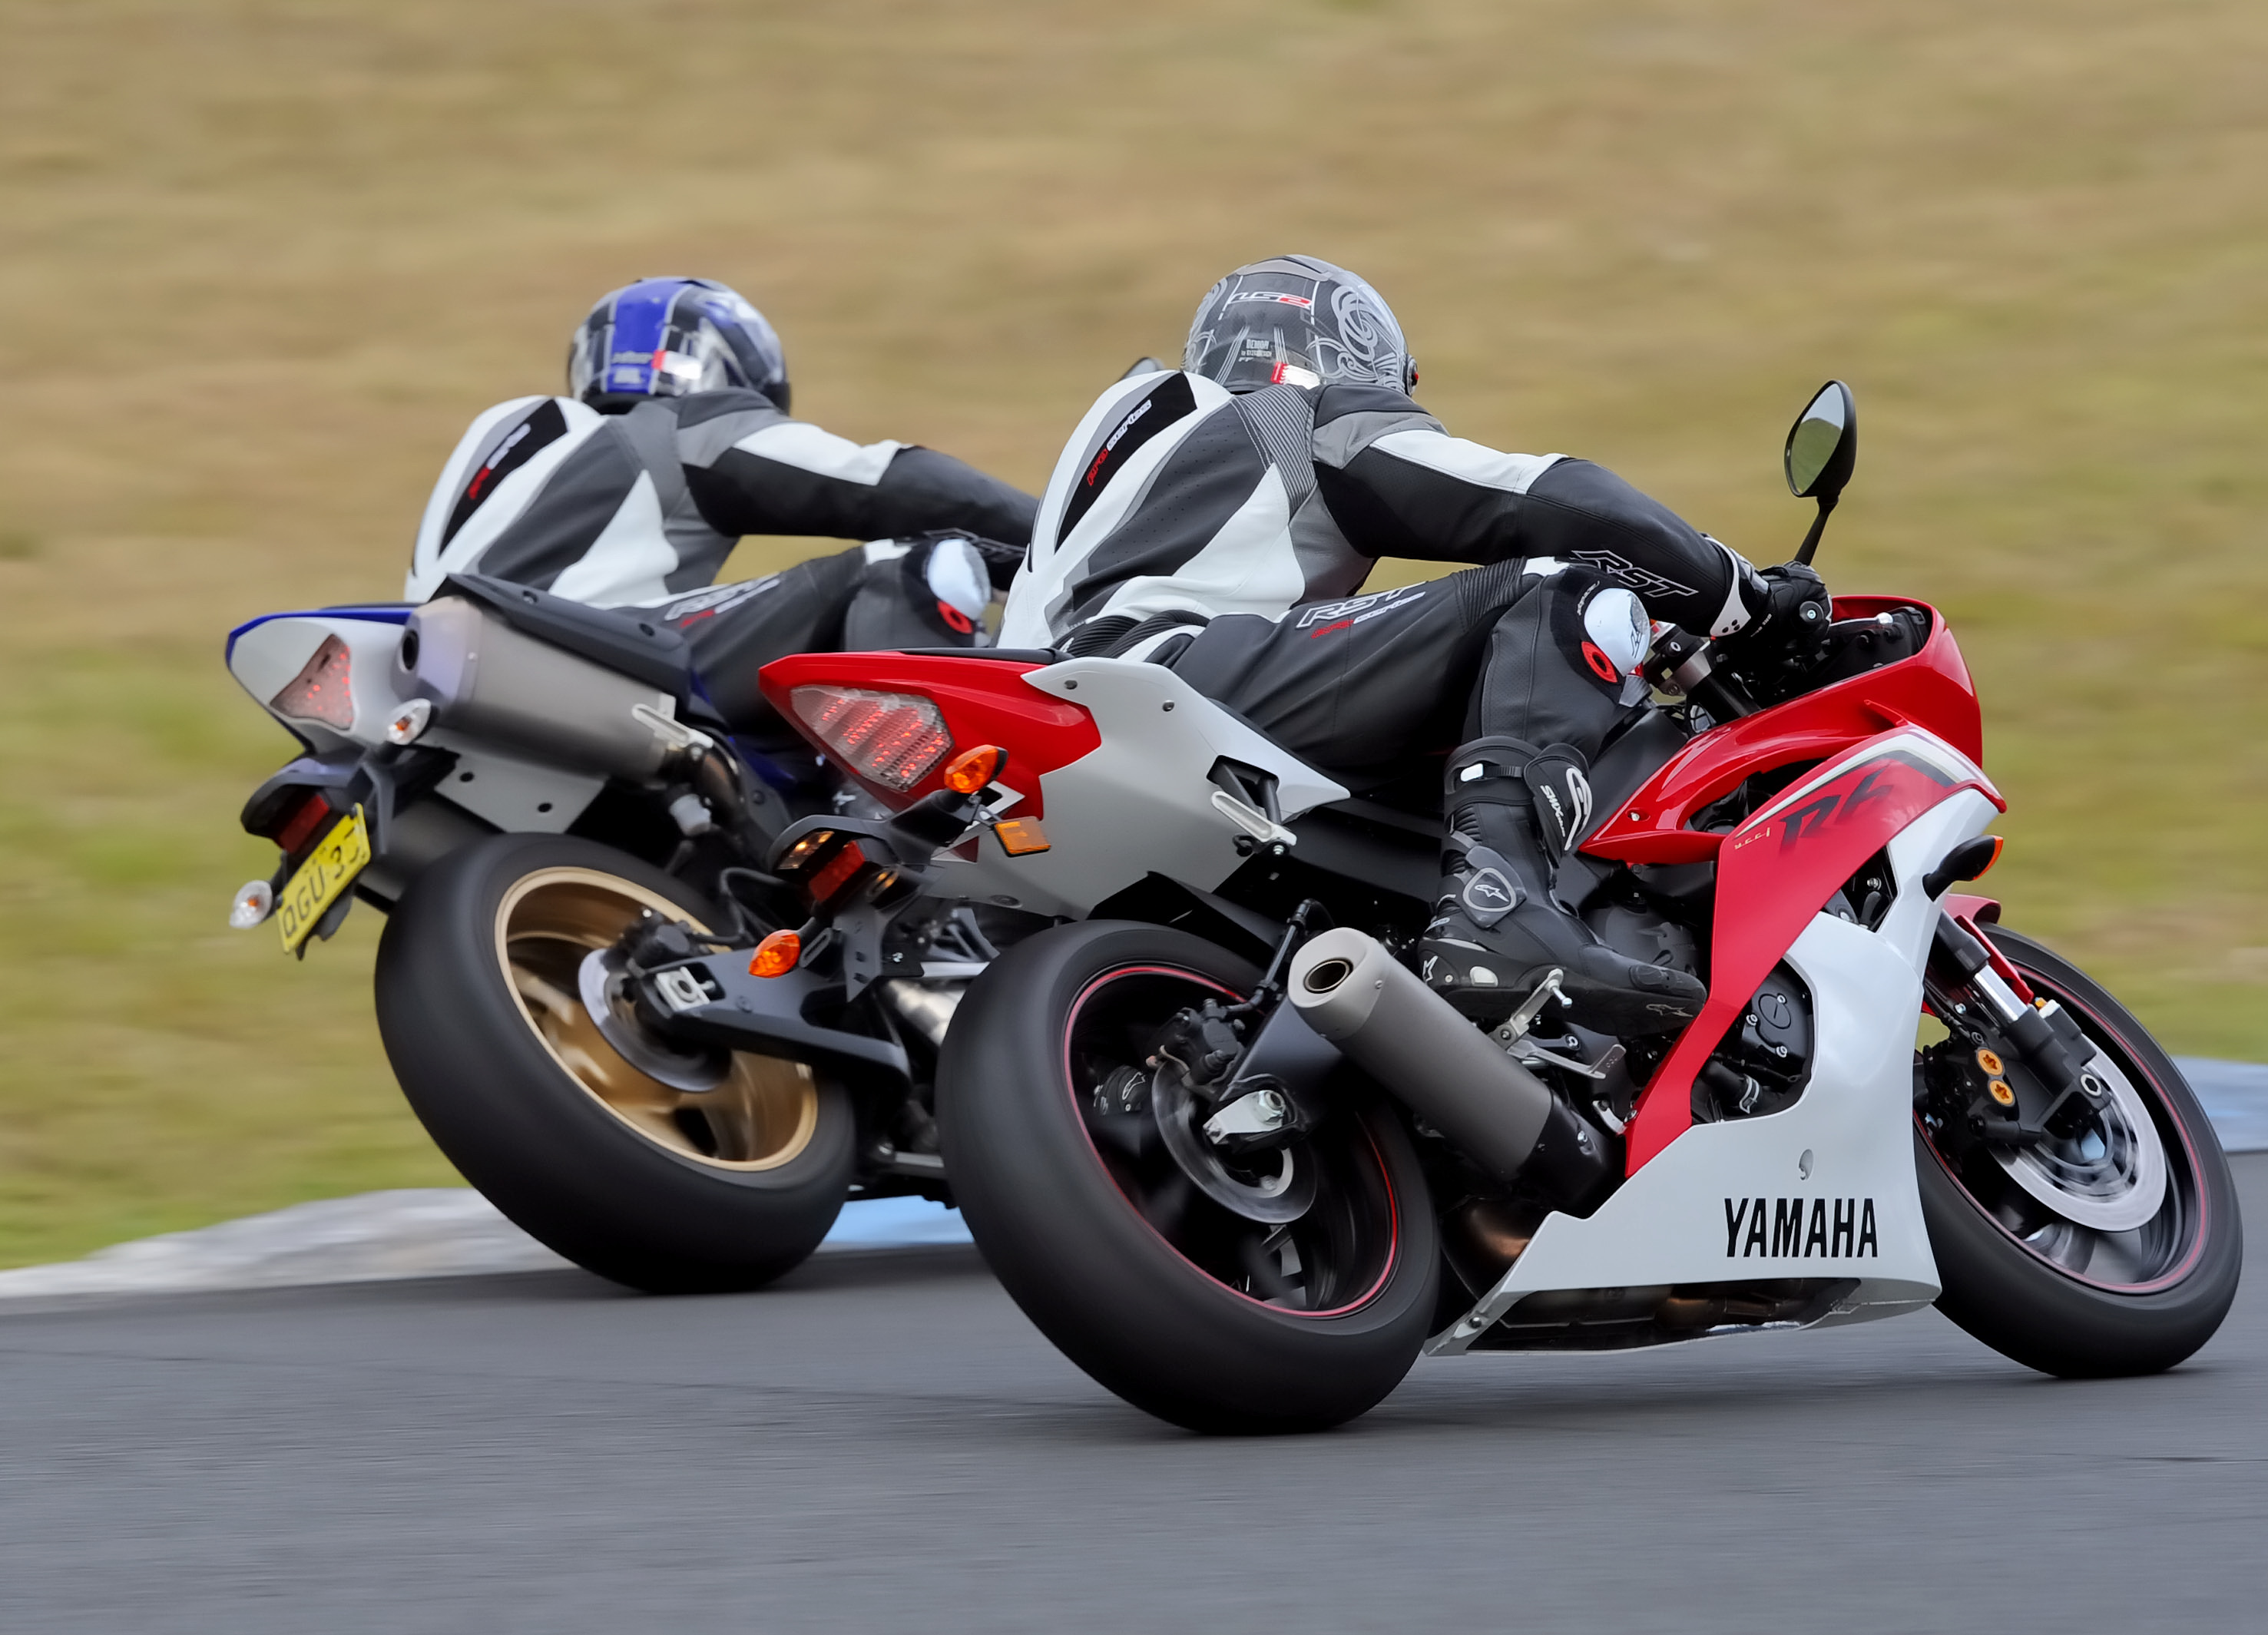 Stay Upright advanced rider training with Yamaha